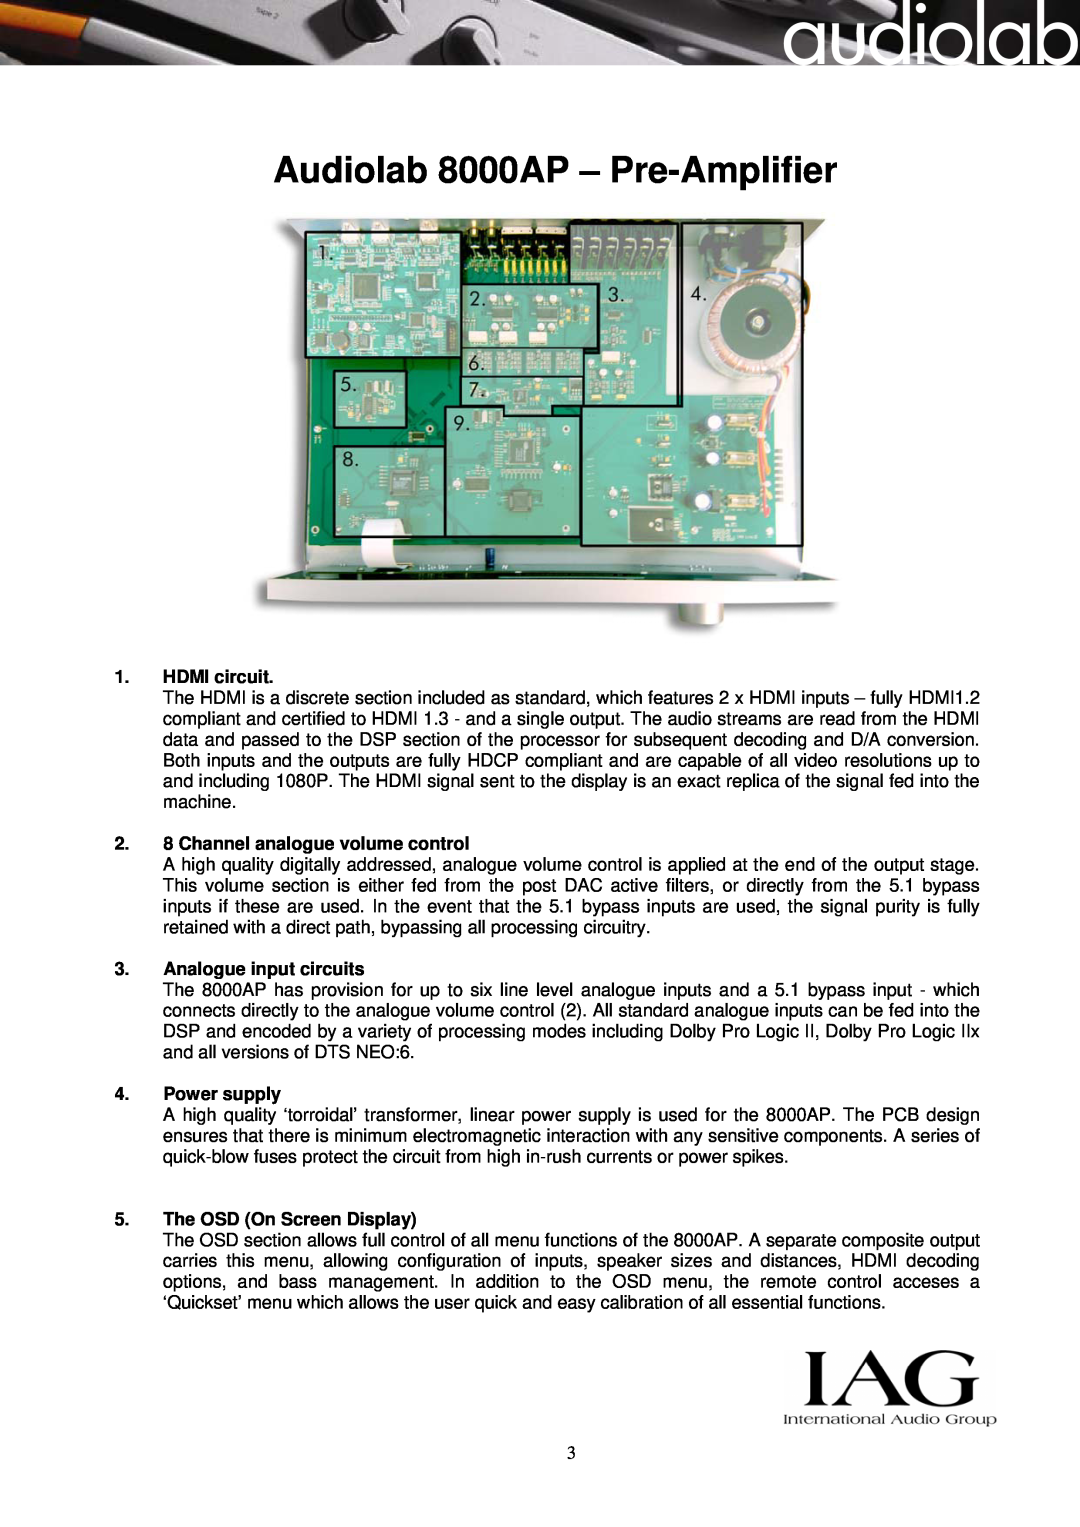 Audiolab manual Audiolab 8000AP - Pre-Amplifier, HDMI circuit, Channel analogue volume control, Analogue input circuits 